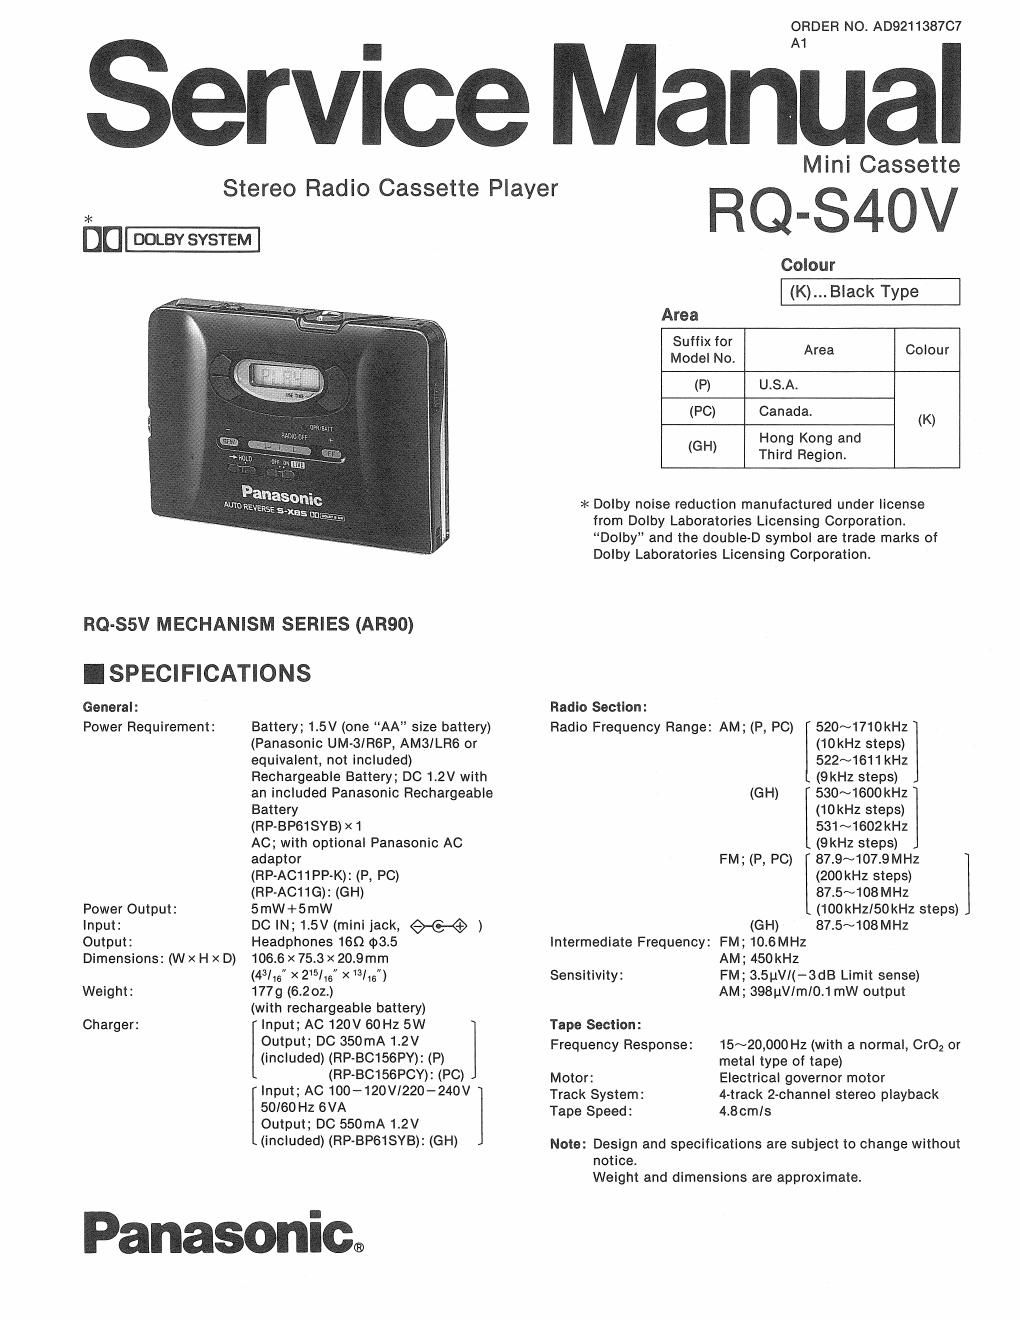 panasonic rq s 40 v service manual